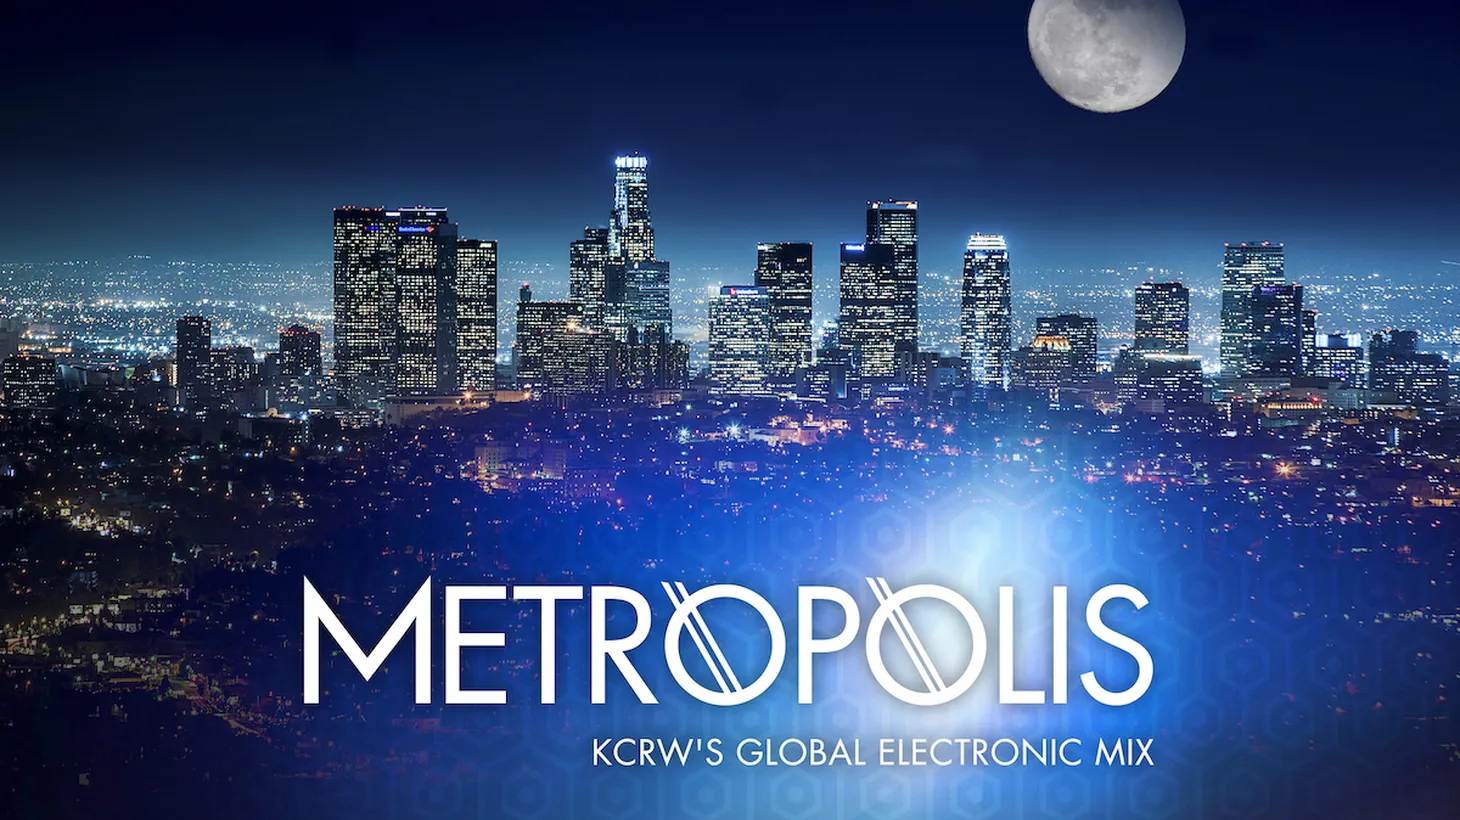 Metropolis playlist, February 19, 2022.